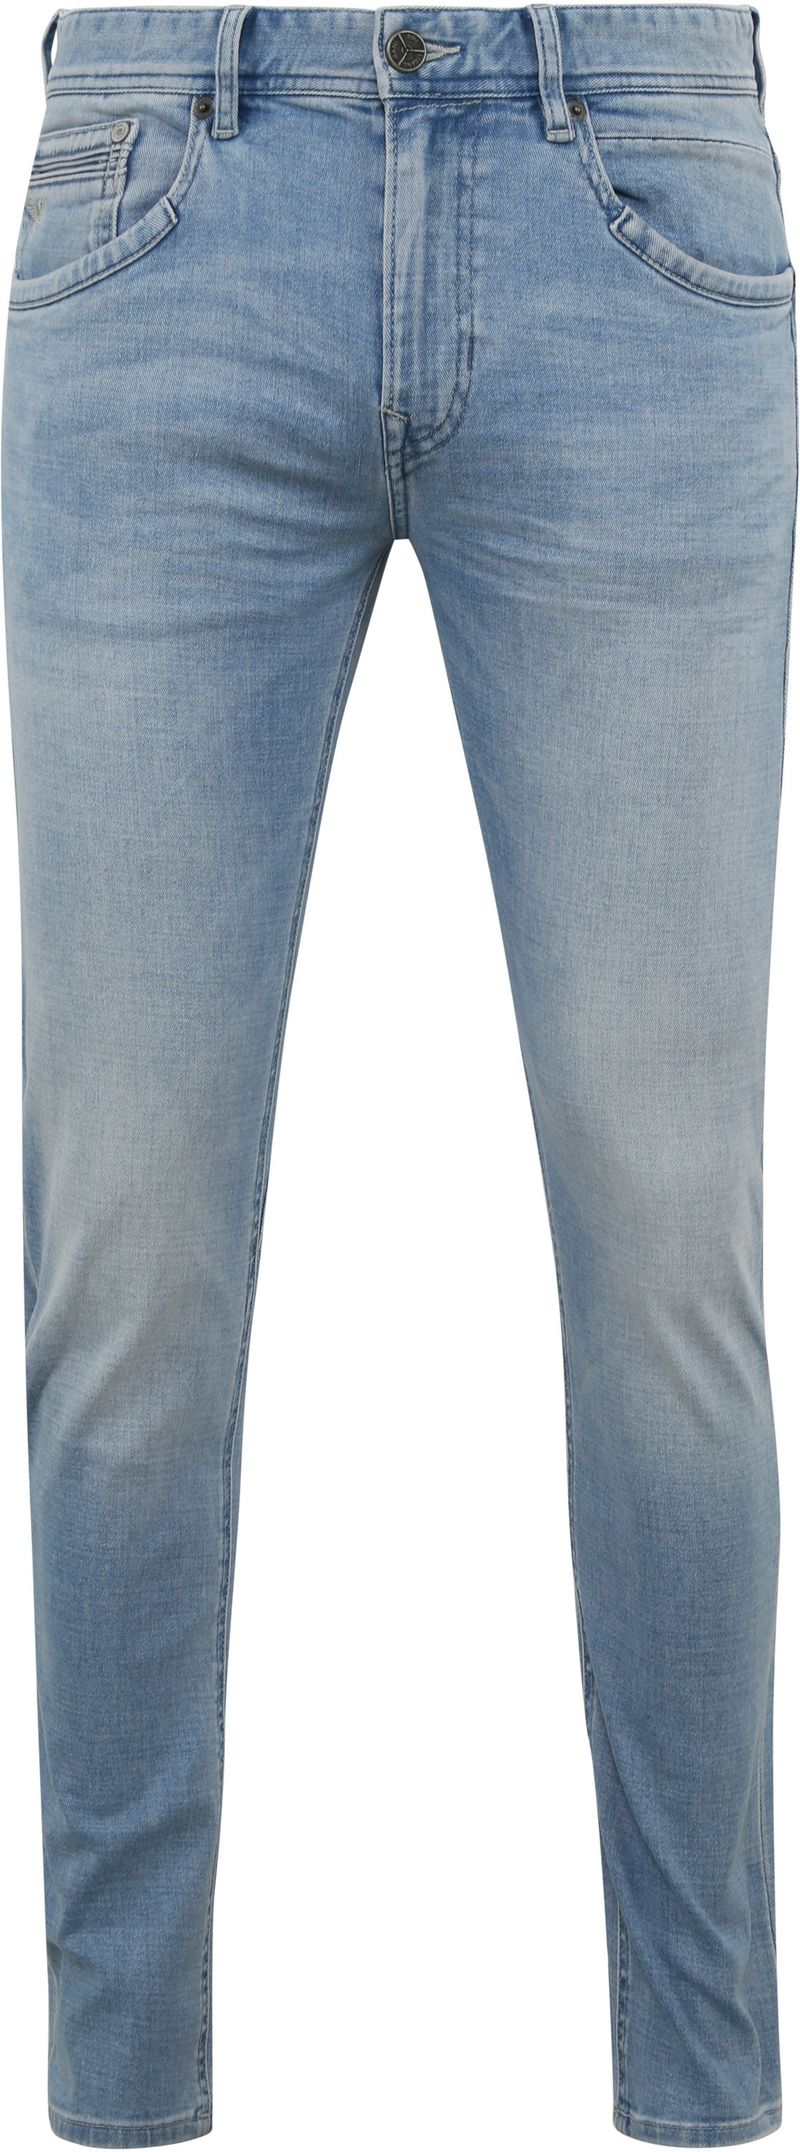 PME Legend Tailwheel Jeans Hellblau CLB - Größe W 36 - L 32 von PME Legend